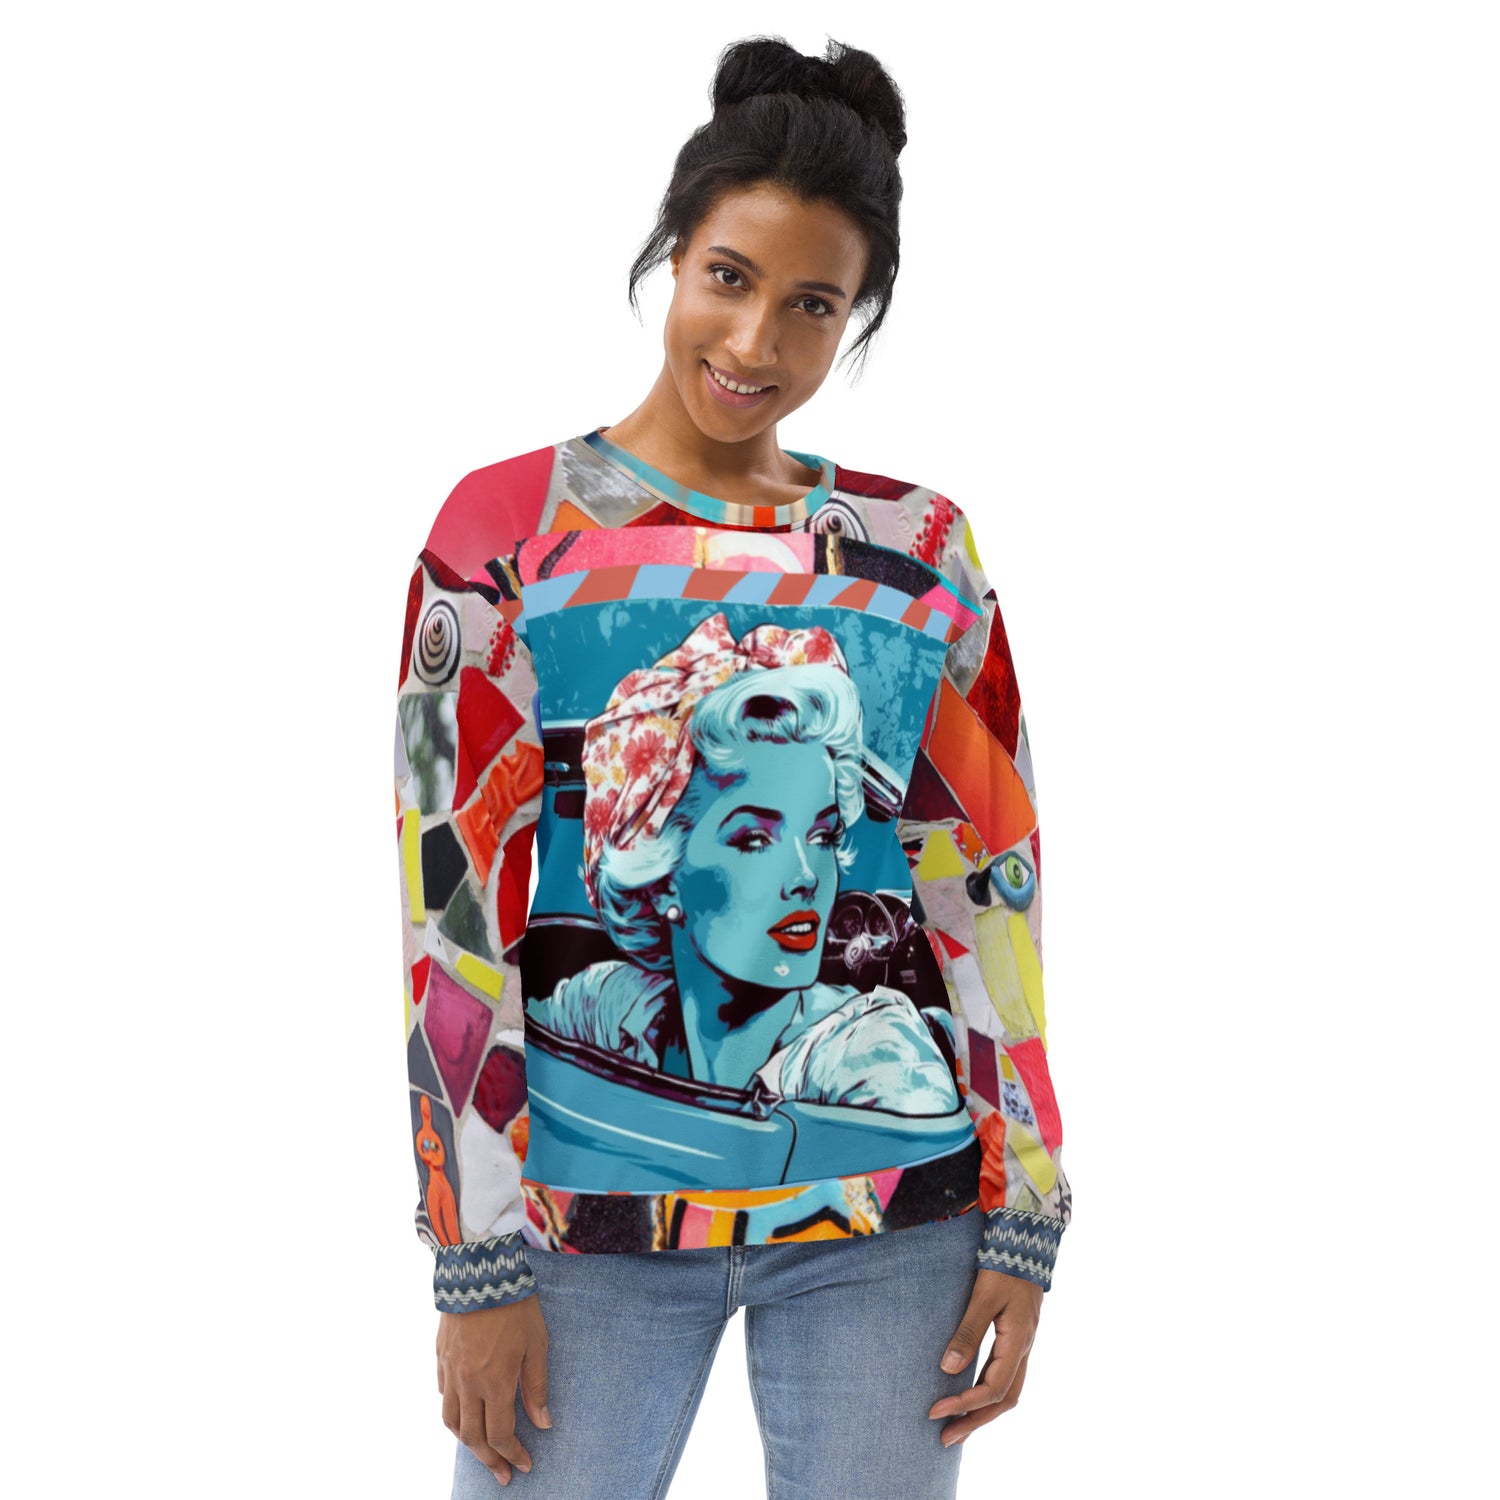 Girl on Blue Highway Retro Print Summer Weight Eco-Poly Unisex Sweatshirt